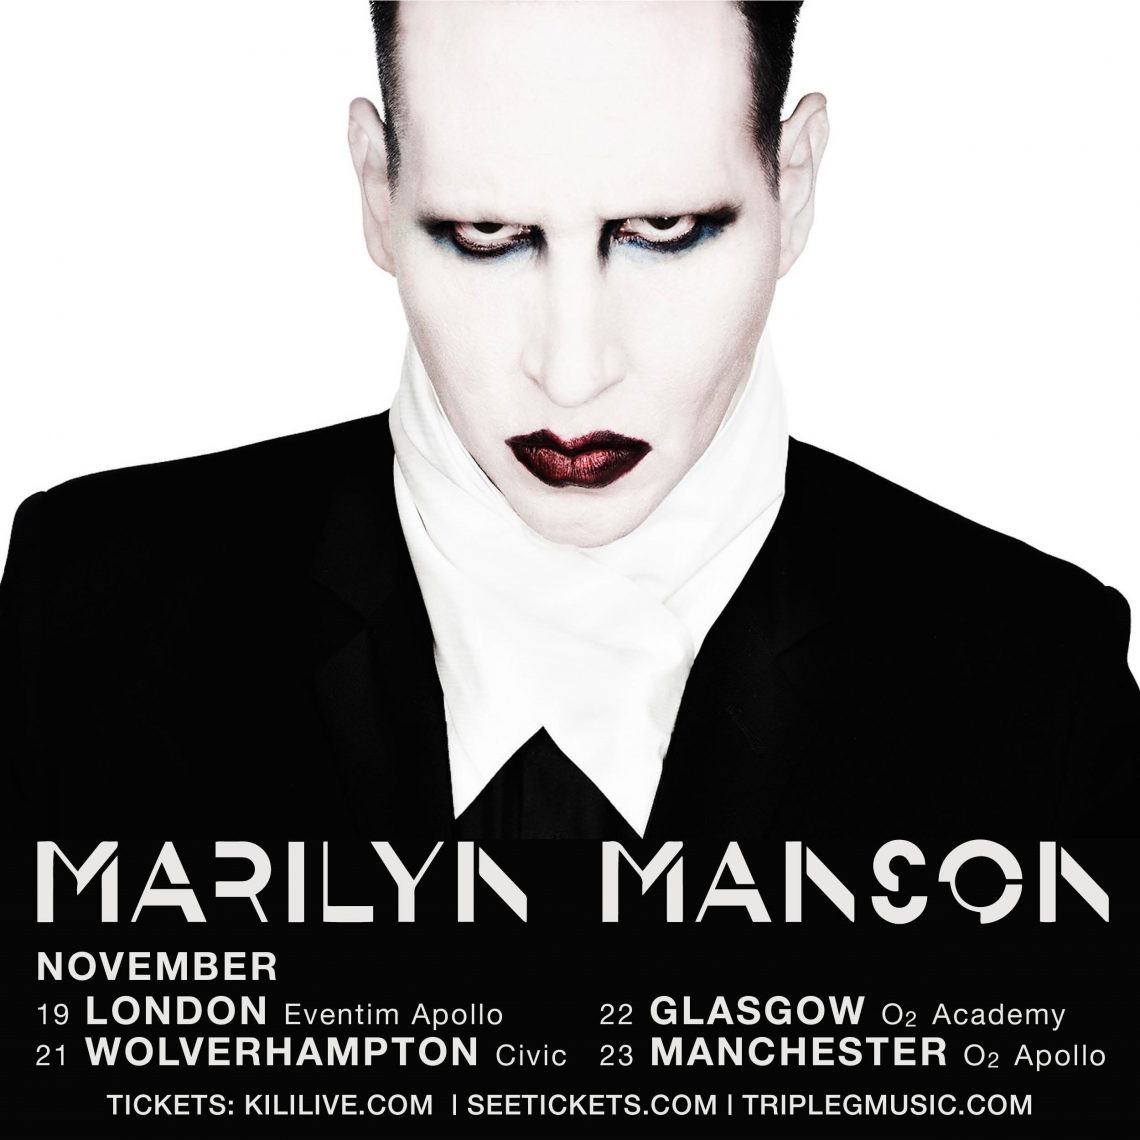 Marilyn Manson – ANNOUNCES UK TOUR DATES NOVEMBER 2015